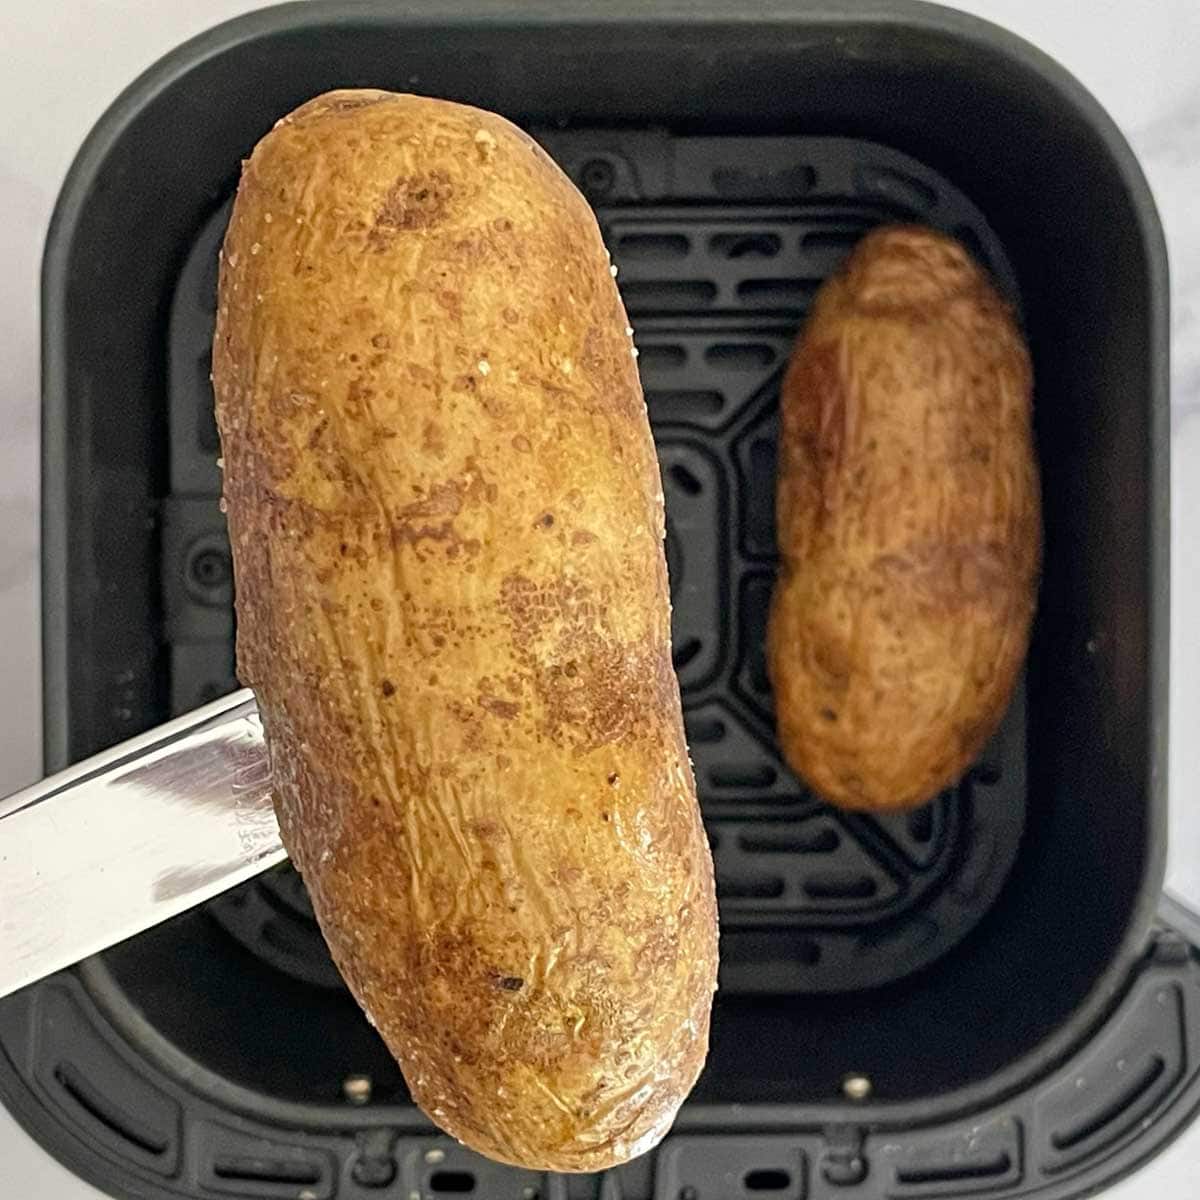 Air fryer baked potatoes.